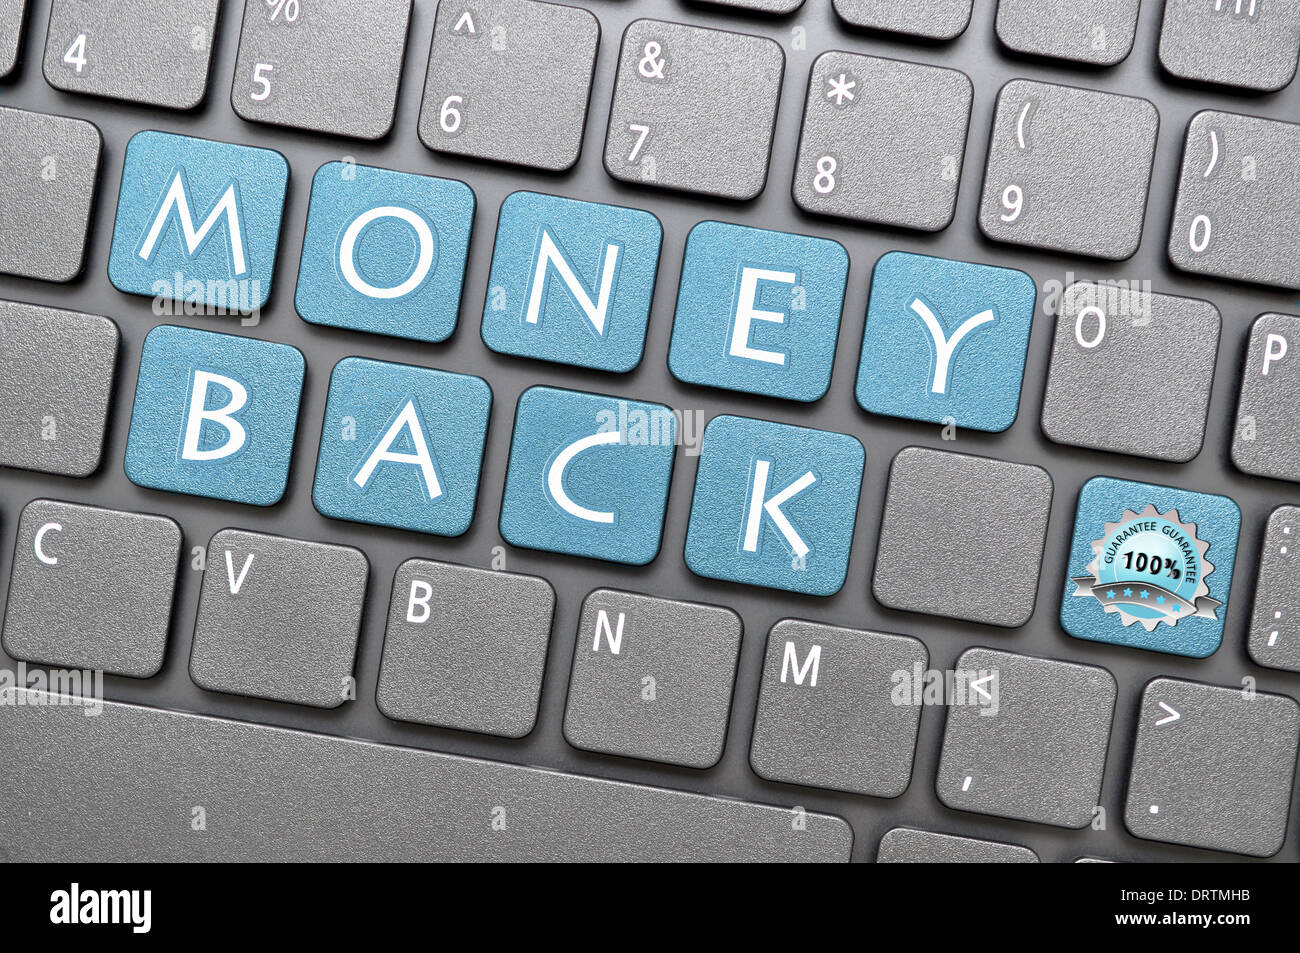 Money back guarantee on keyboard Stock Photo